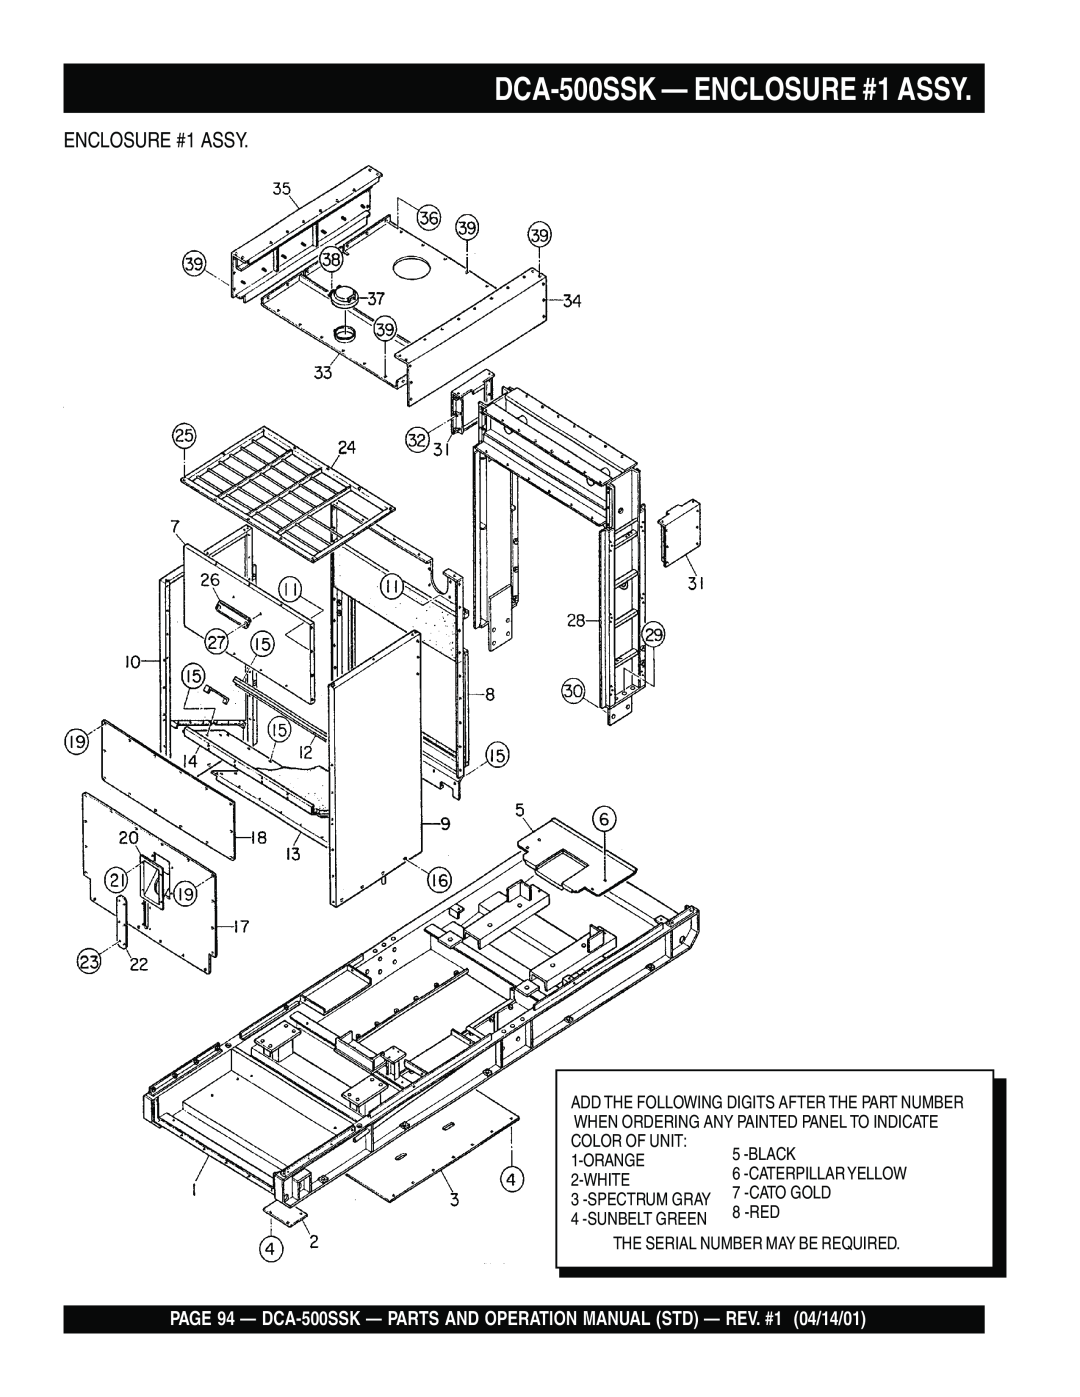 Multiquip operation manual DCA-500SSK - ENCLOSURE #1 ASSY 